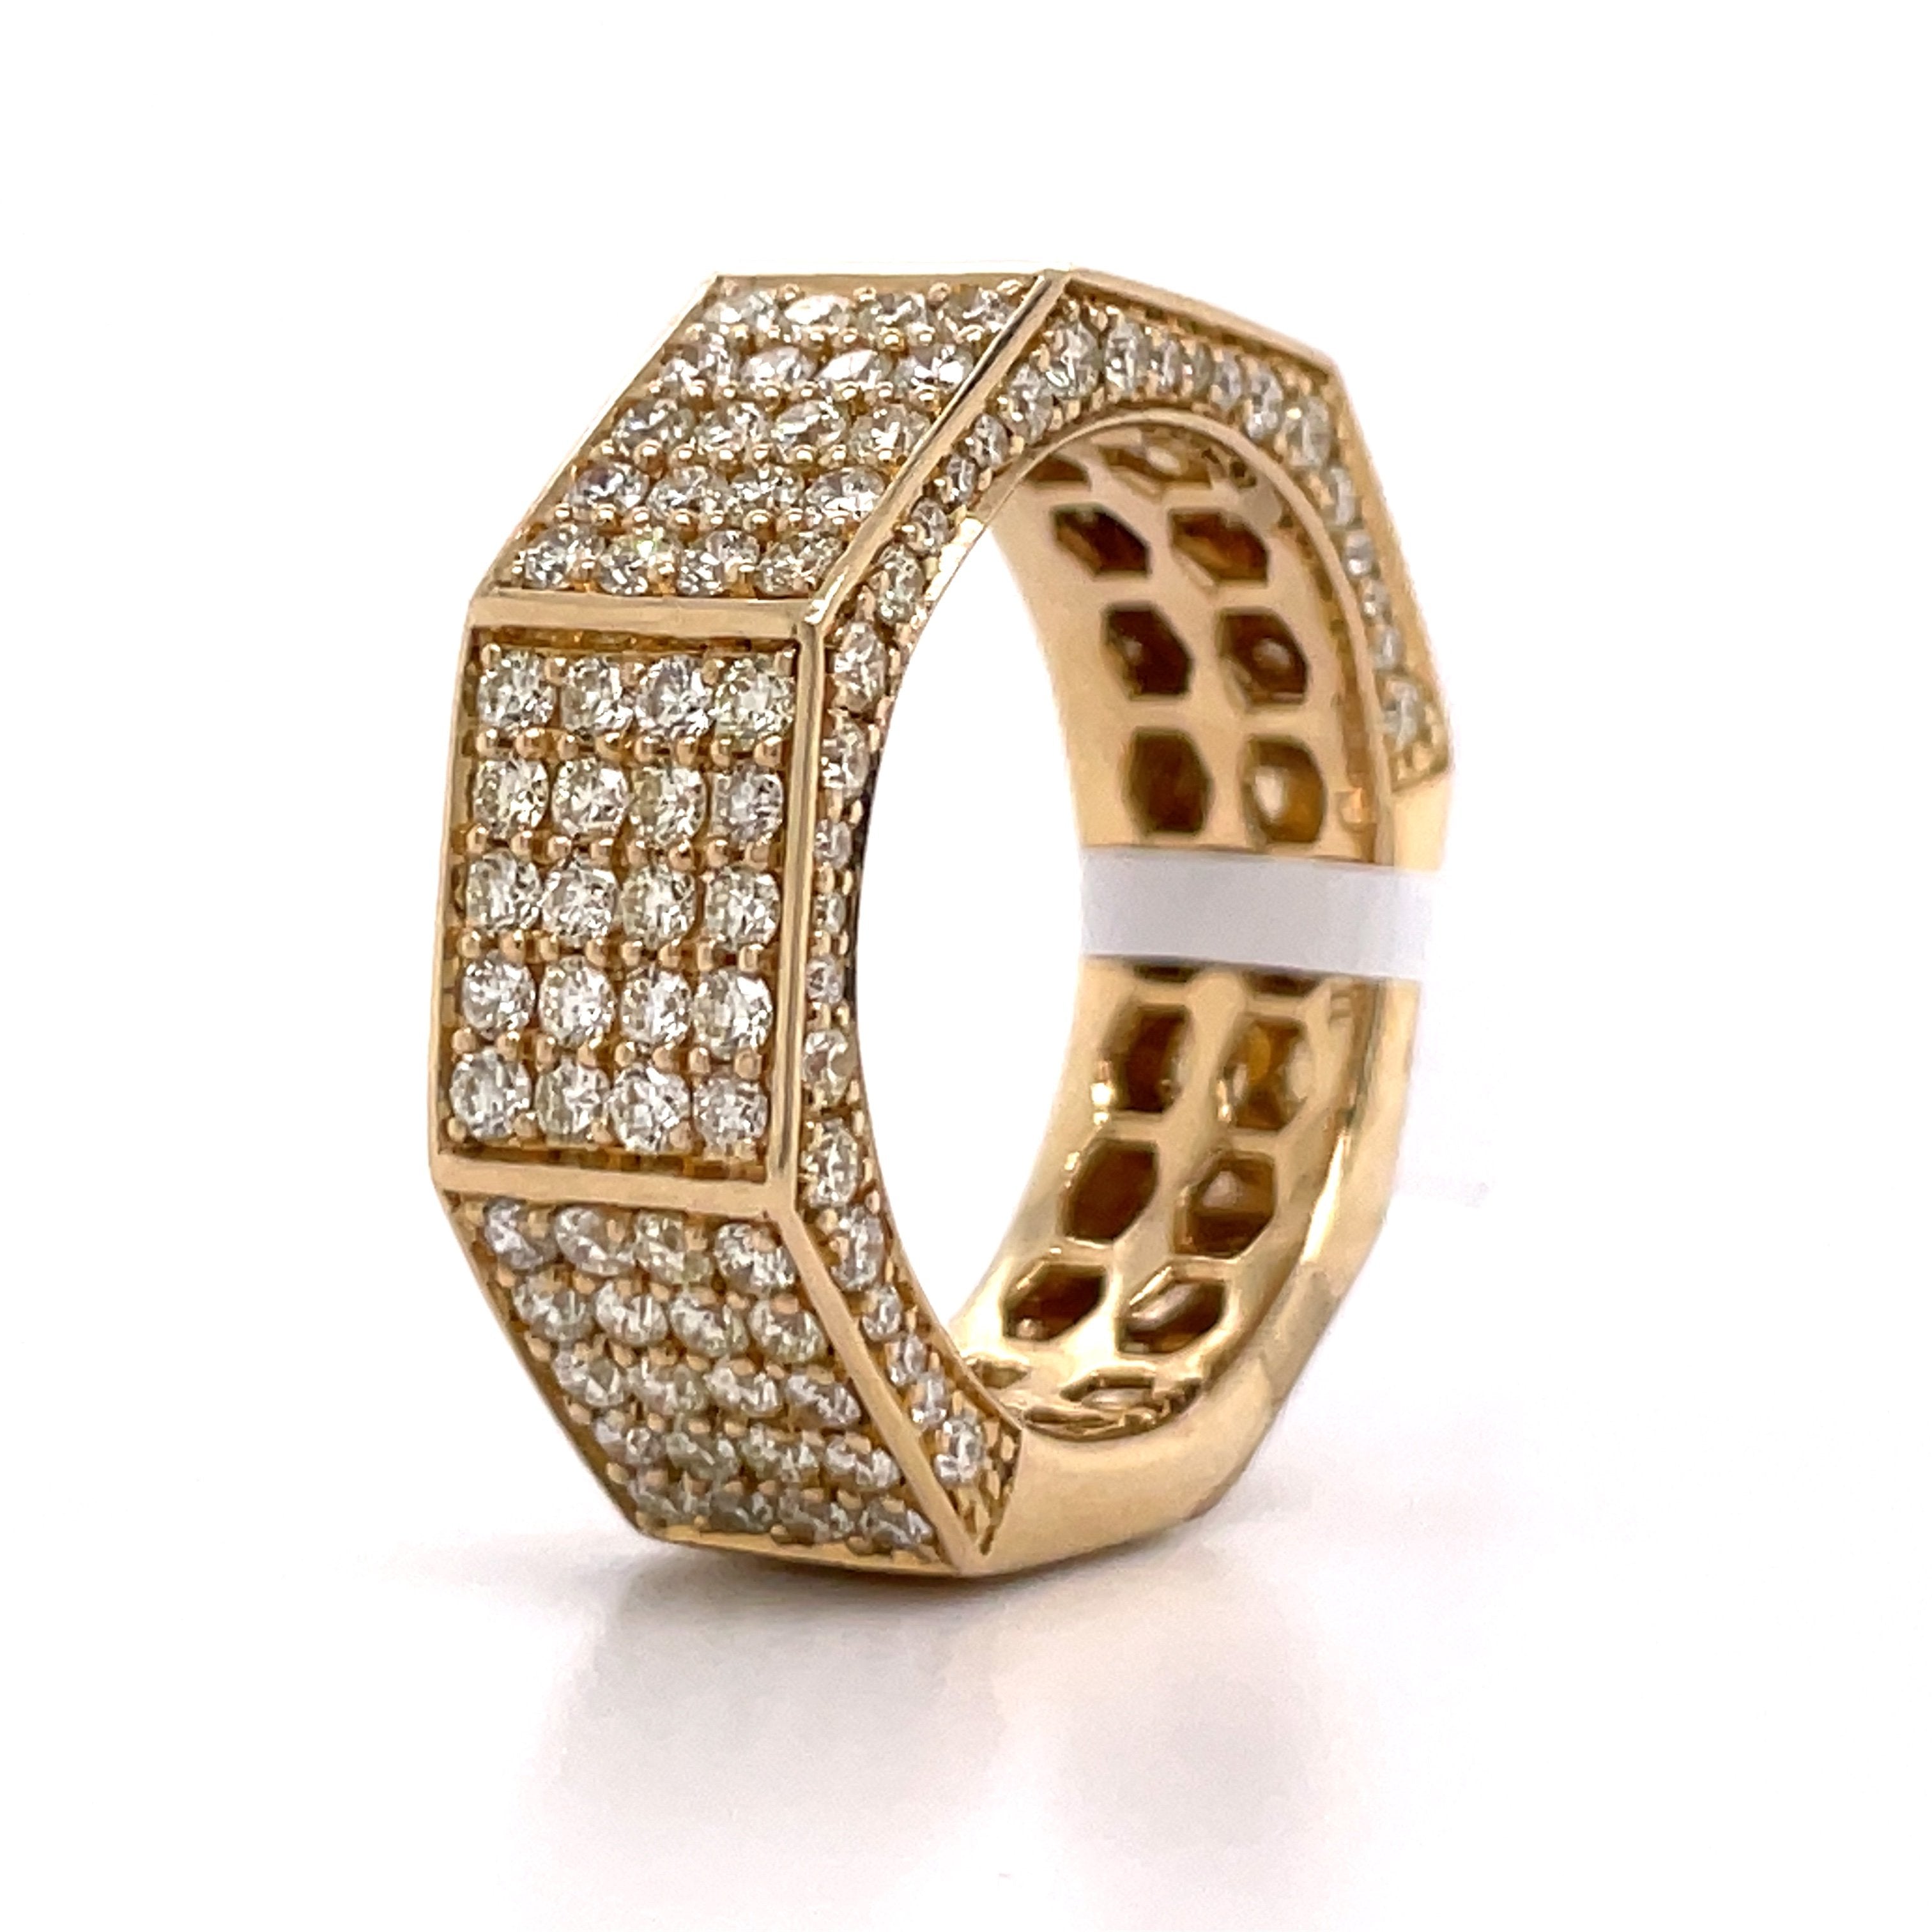 3.20 CT. Diamond Ring in Gold - White Carat - USA & Canada